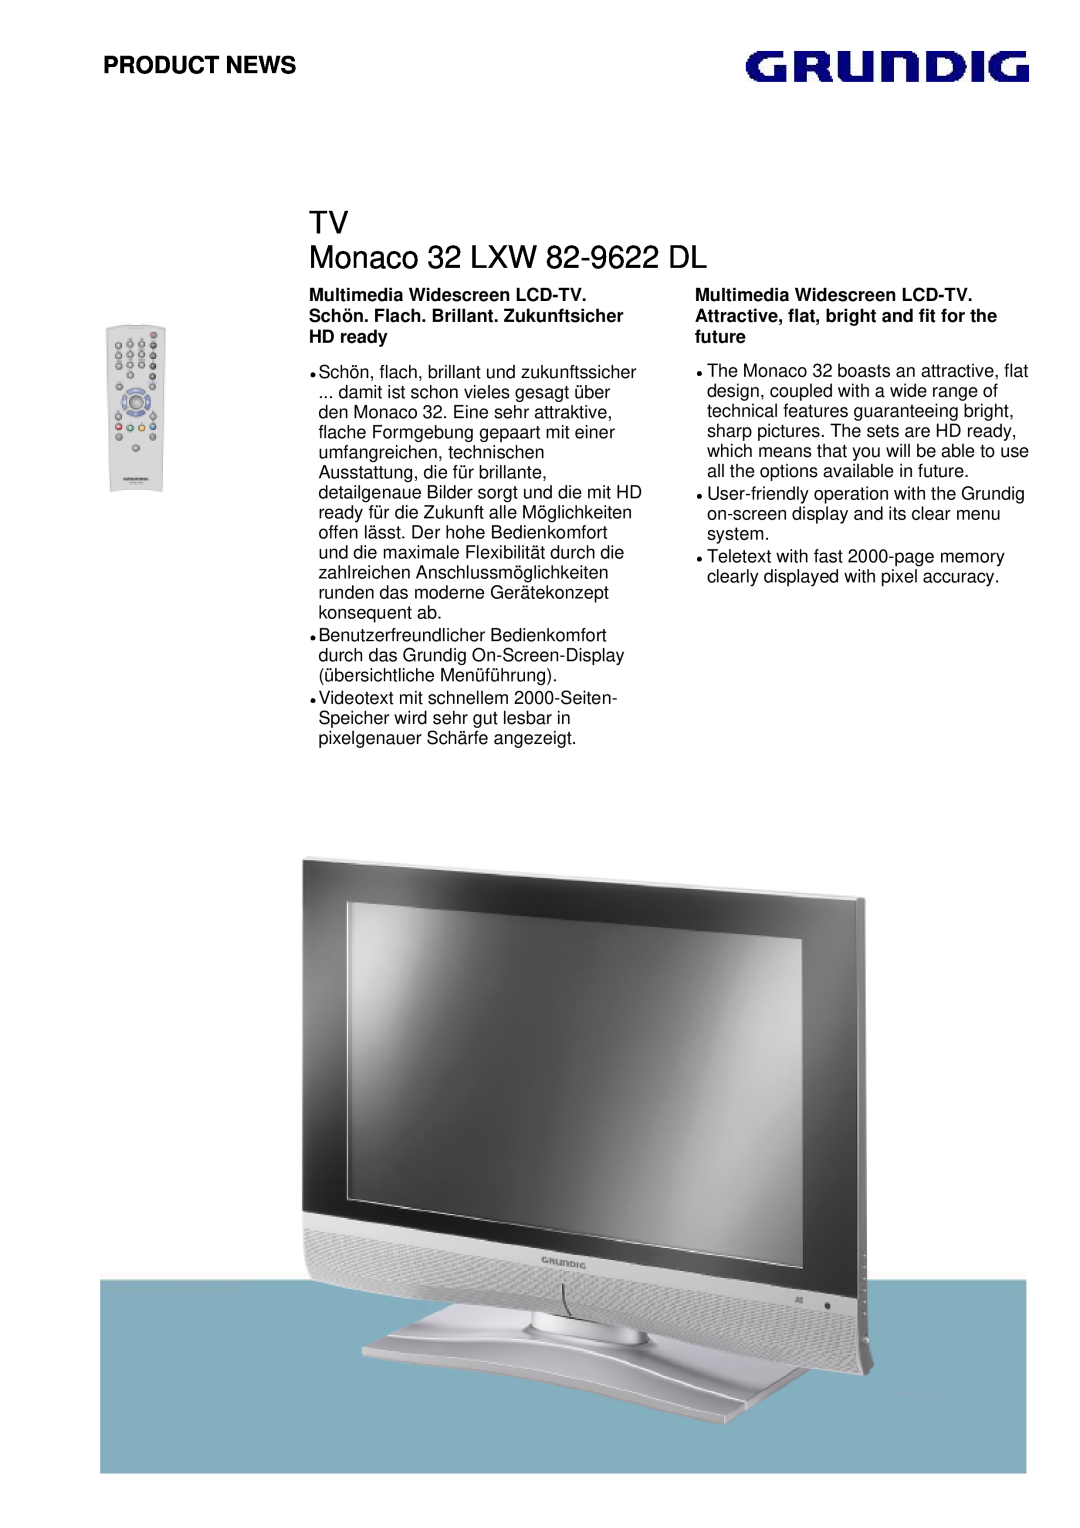 Grundig manual TV Monaco 32 LXW 82-9622 DL, Product News 